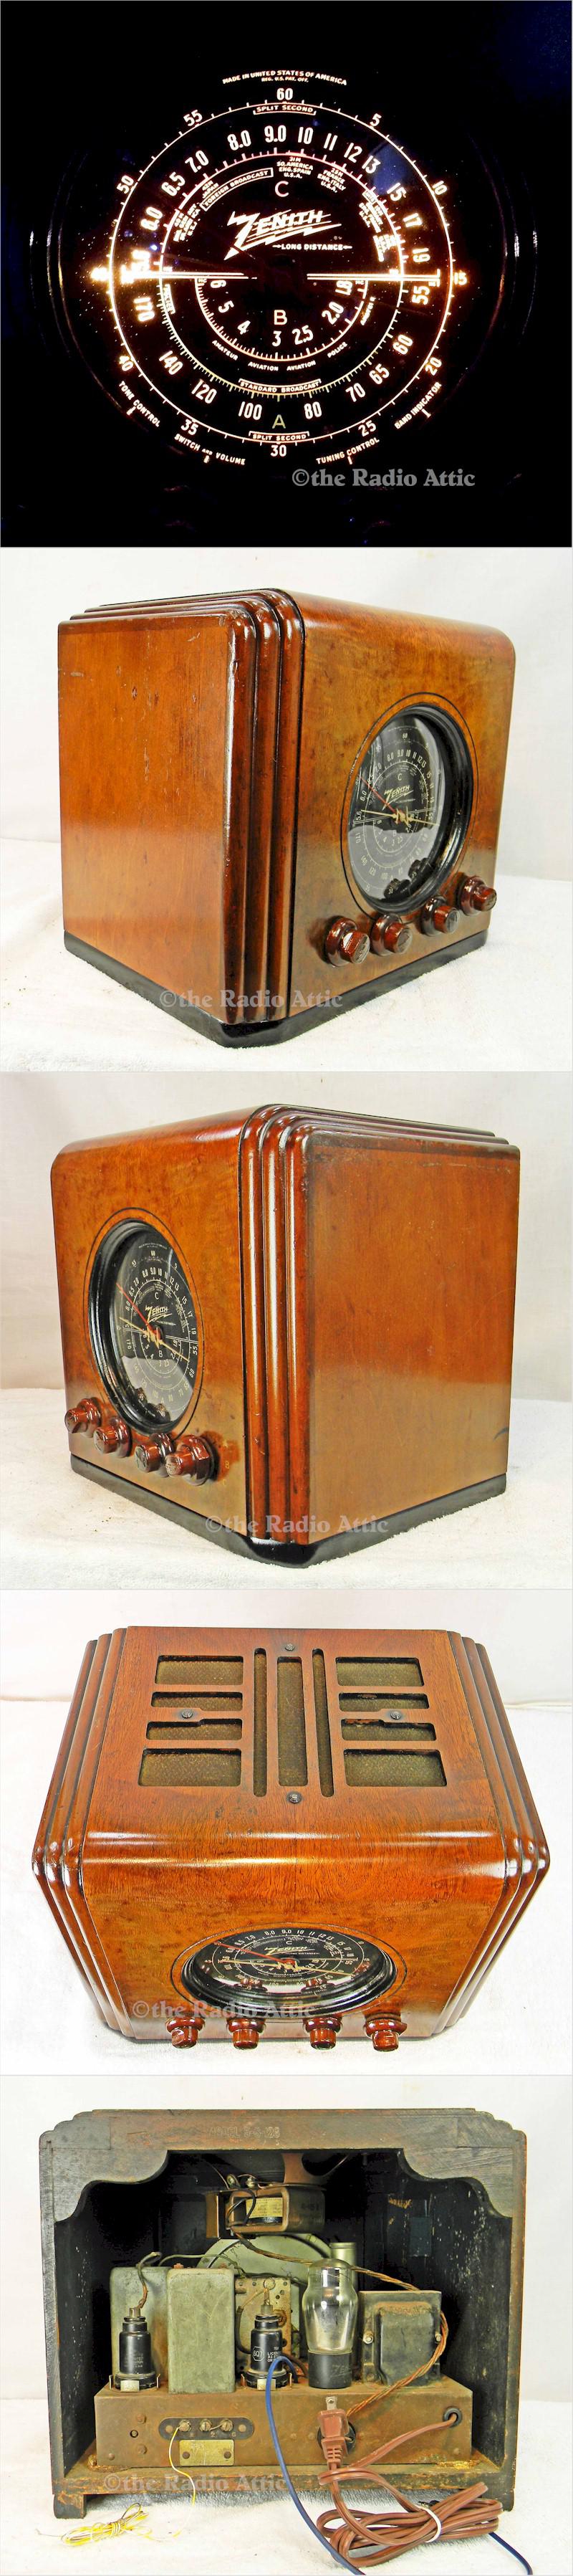 Zenith 6-S-226 "Cube" (1936)